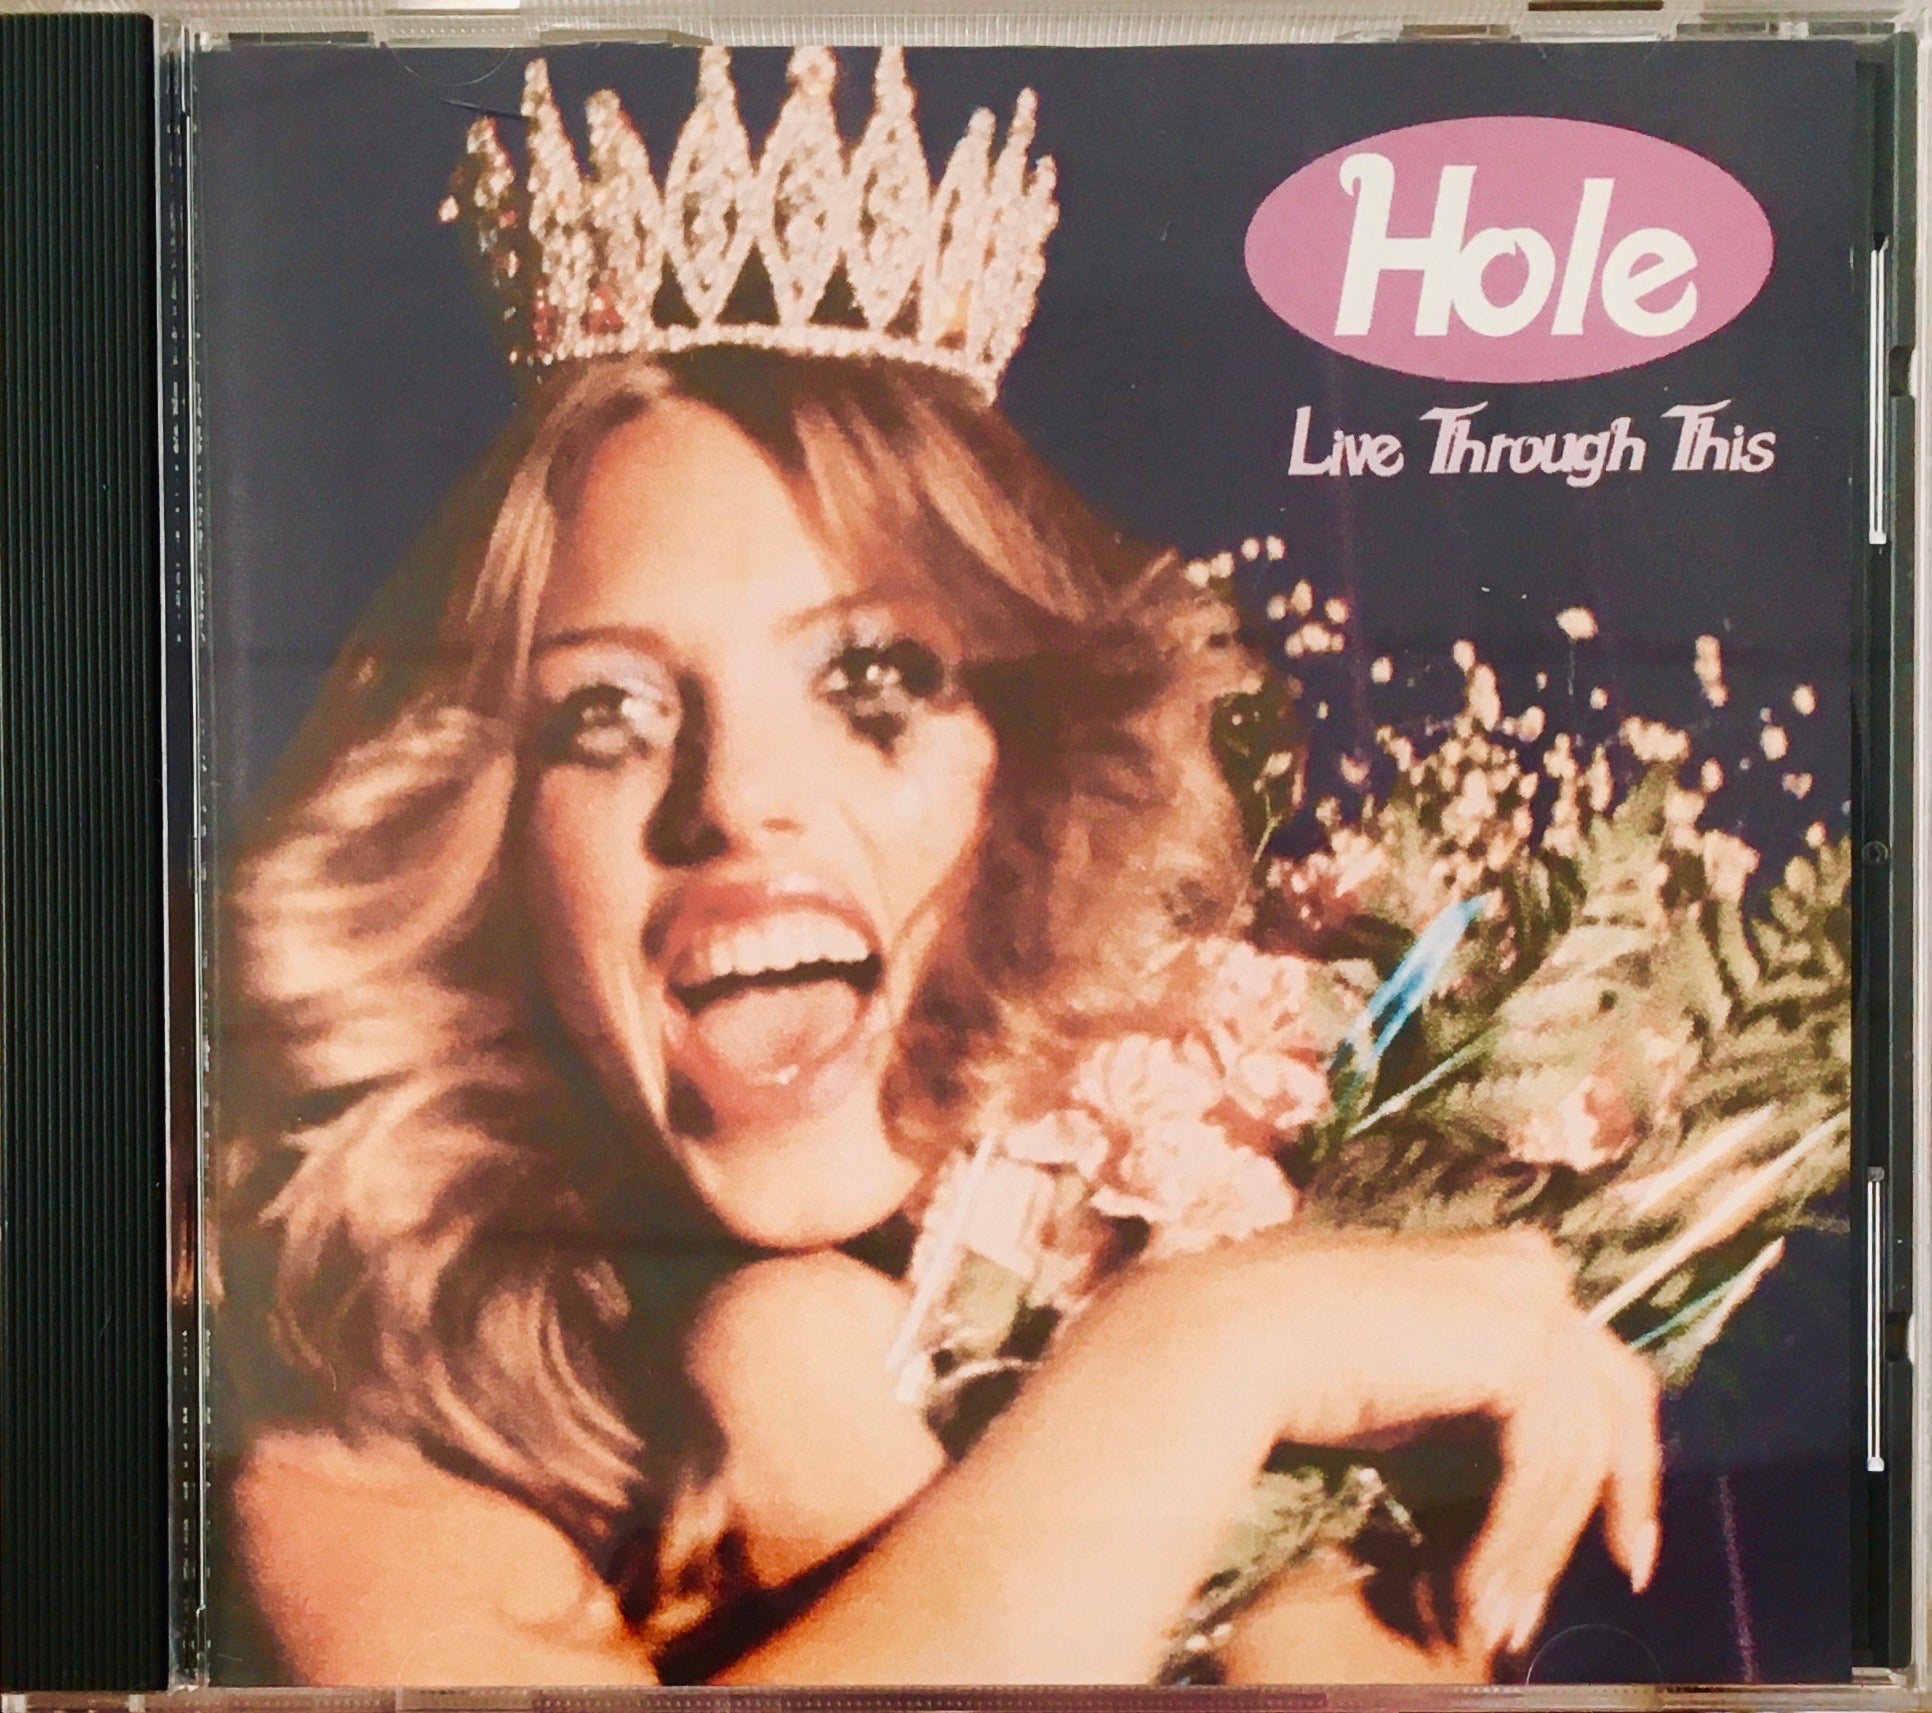 Hole “Live Through This” CD (1994)